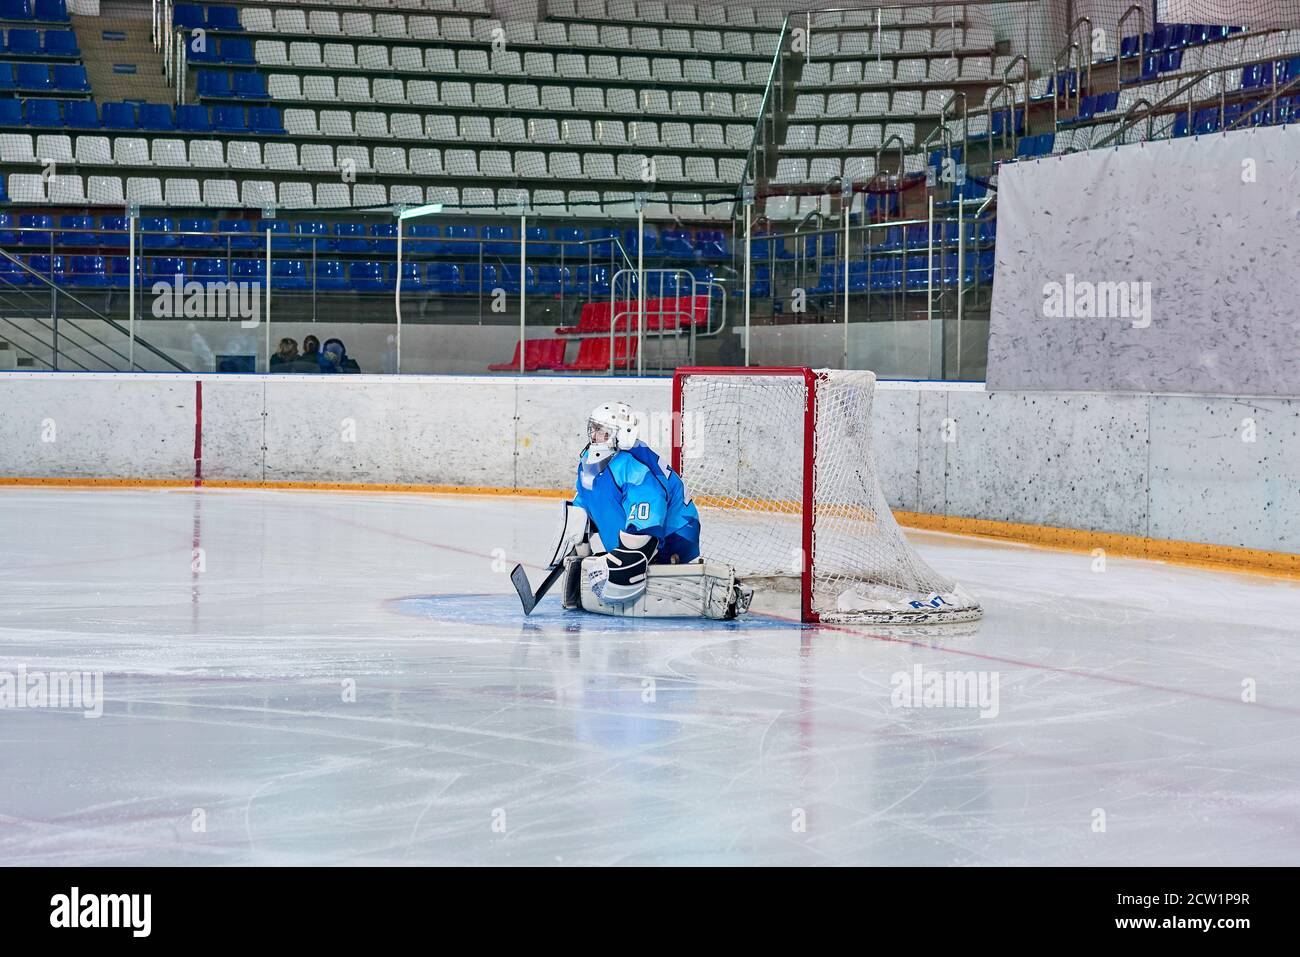 hockey goalie hits the puck Stock Photo